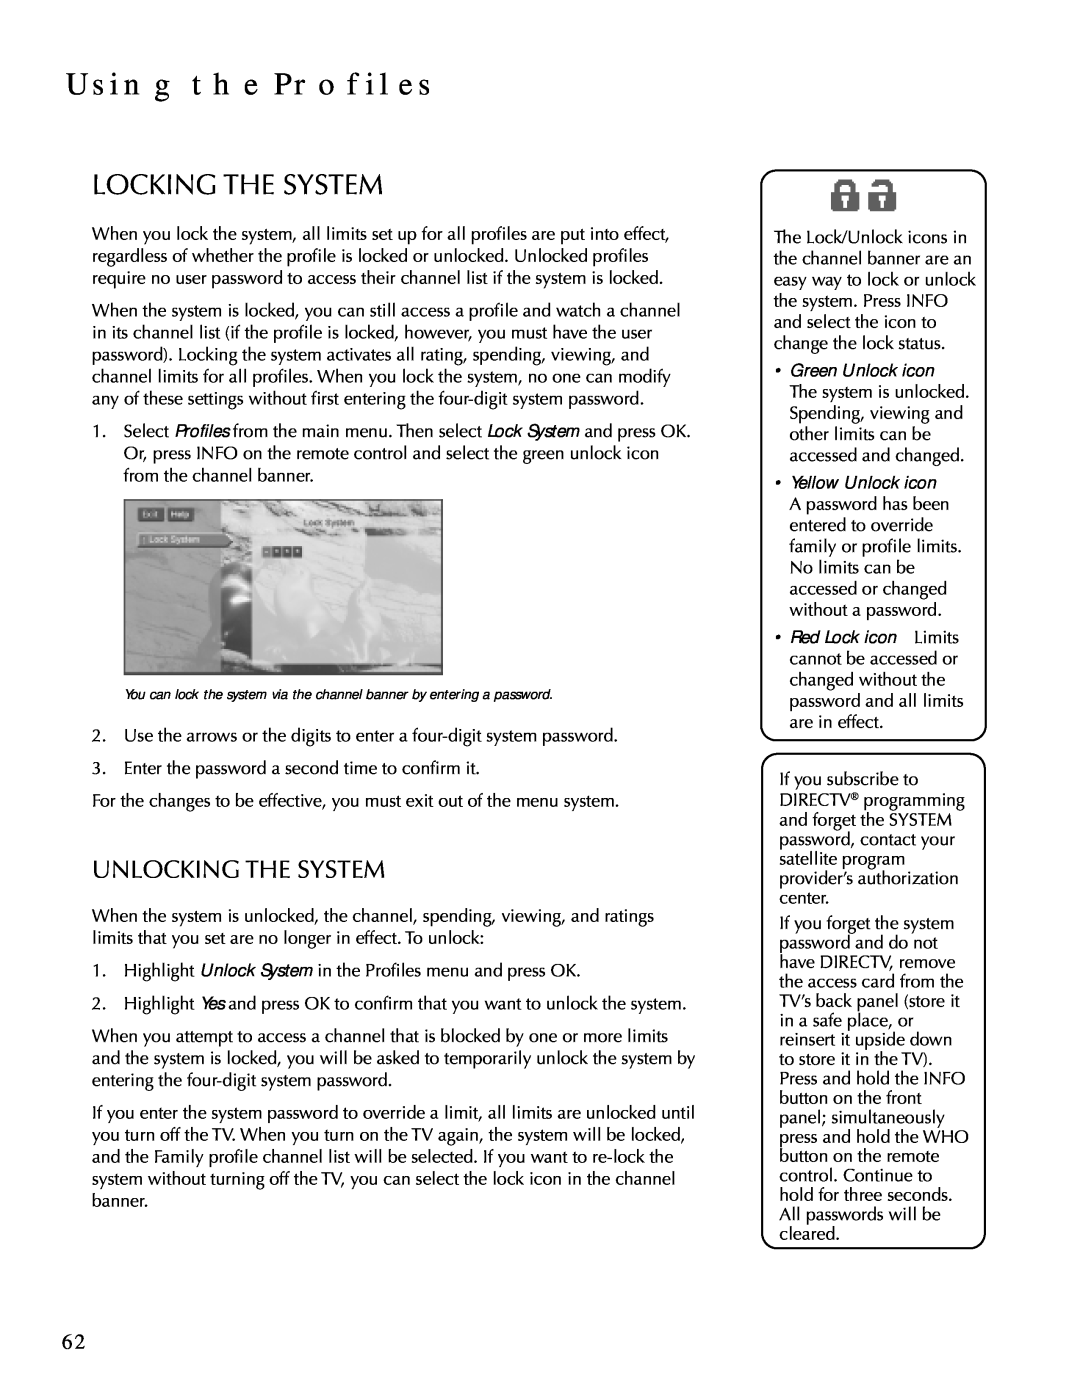 DirecTV HDTV user manual Locking The System, Unlocking The System, Using The Profiles 